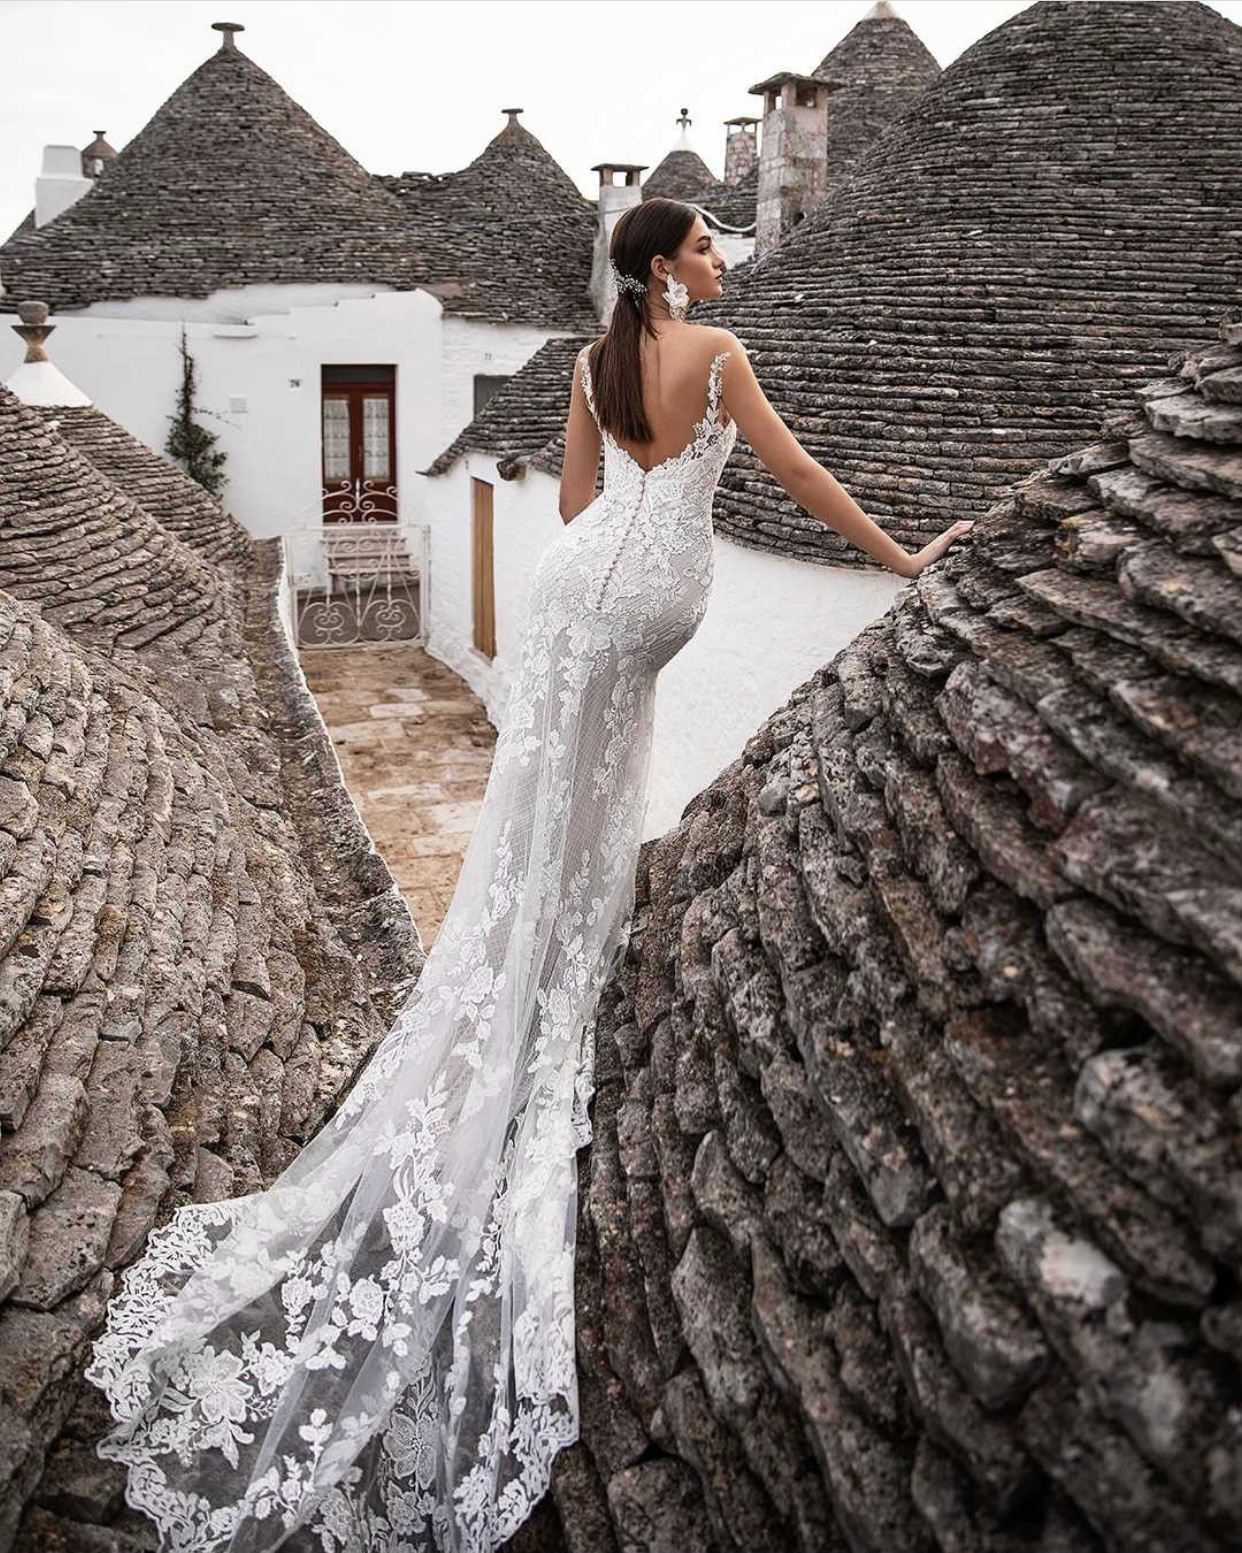 Un mariage mémorable de luxe à Albarobello en Italie - Wedding planner Italie - Destination wedding - Luxury Events Agency